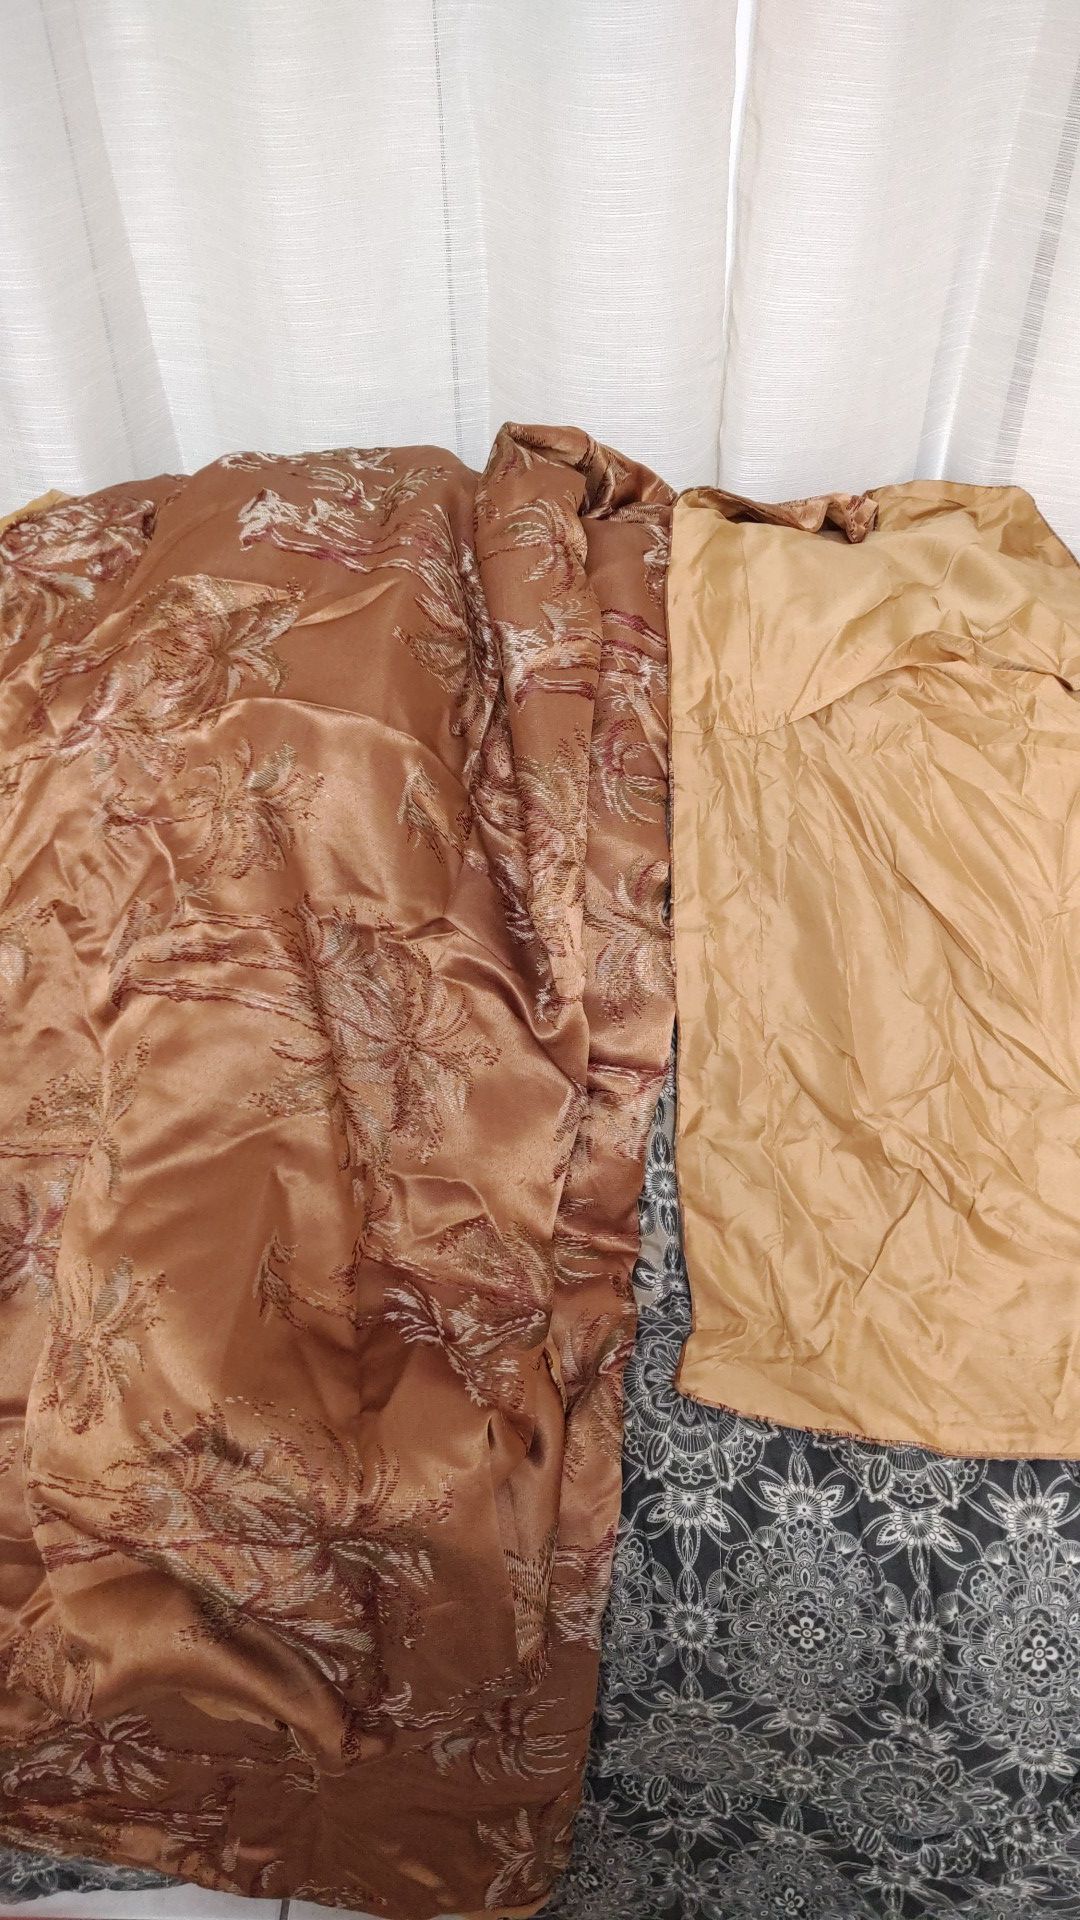 1 Brownish Gold Flat Comforter & 1 Matching Large Pillow Case